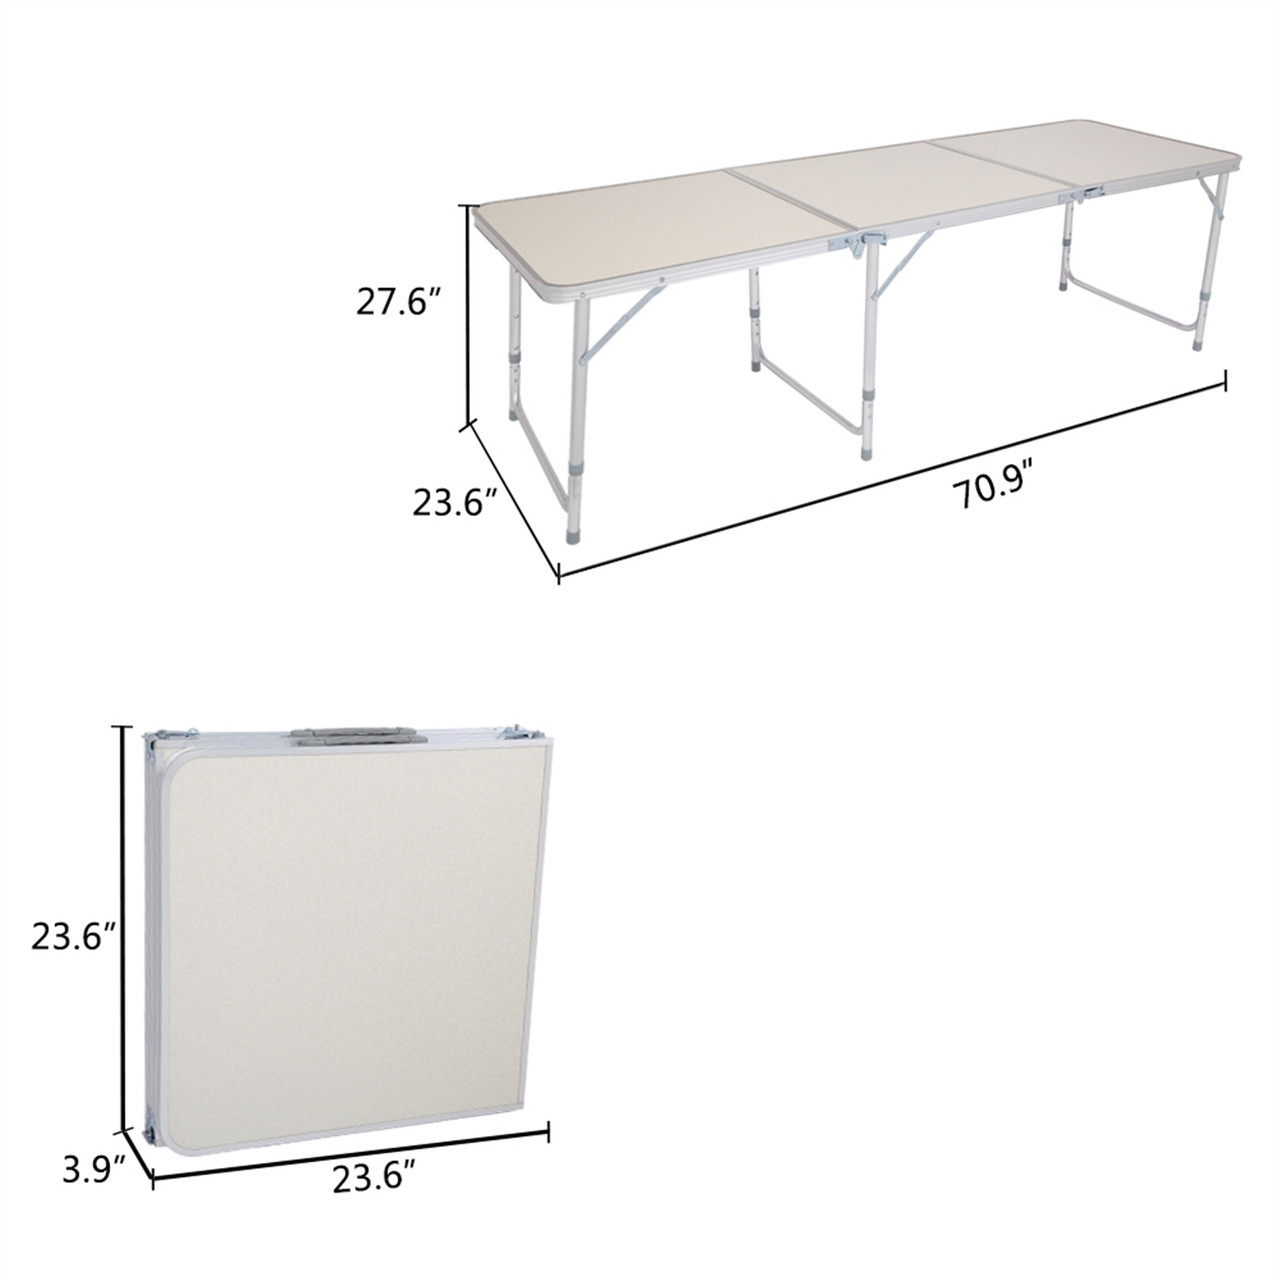 Aluminum Alloy Height-Adjustable Folding Table, White product image